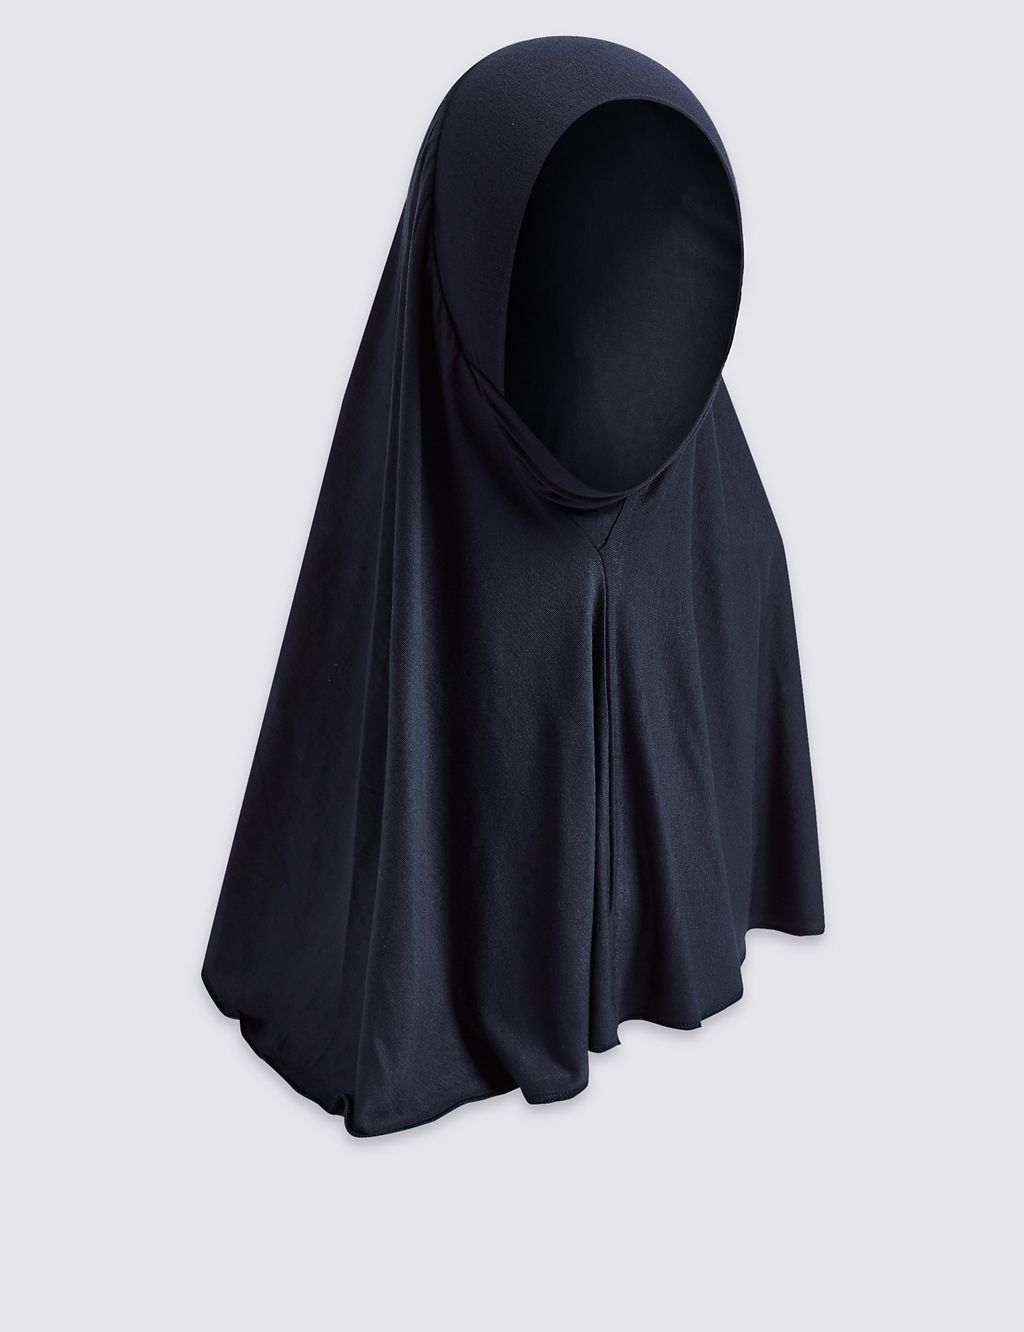 Hijab 1 of 1